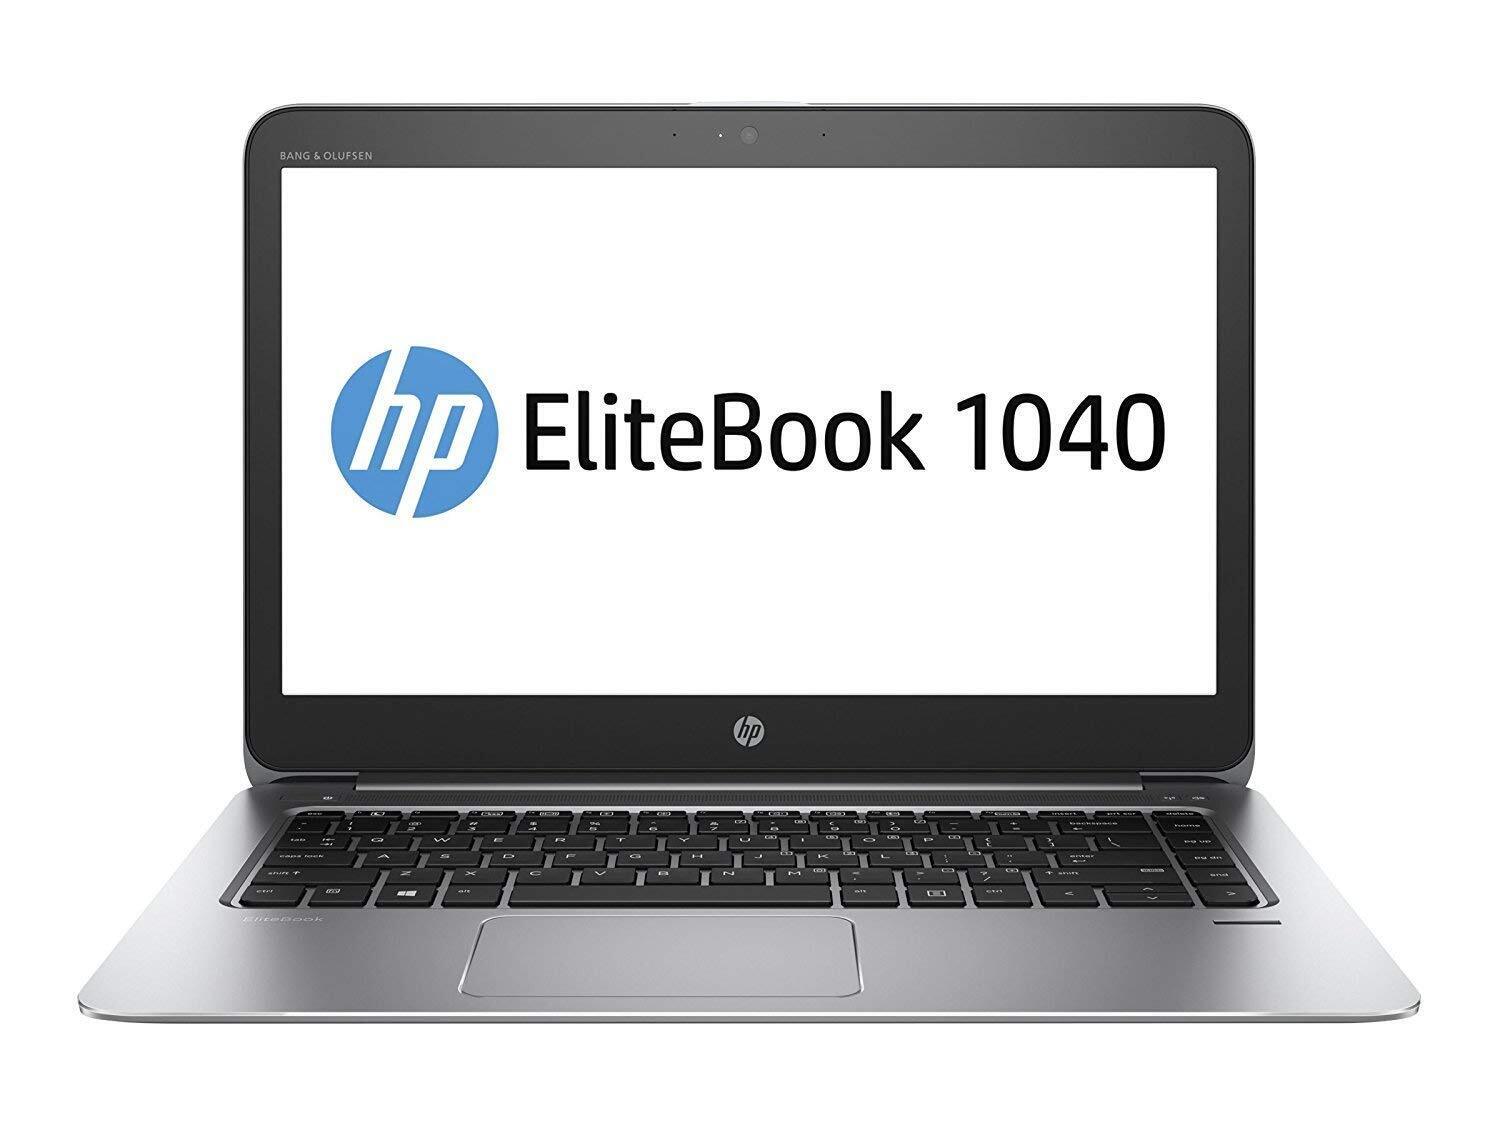 HP Elitebook Folio 1040 G3 i7 6600u 2.4Ghz 8GB RAM 512GB SSD 14" HD Win 10 - B Grade Full Size Image